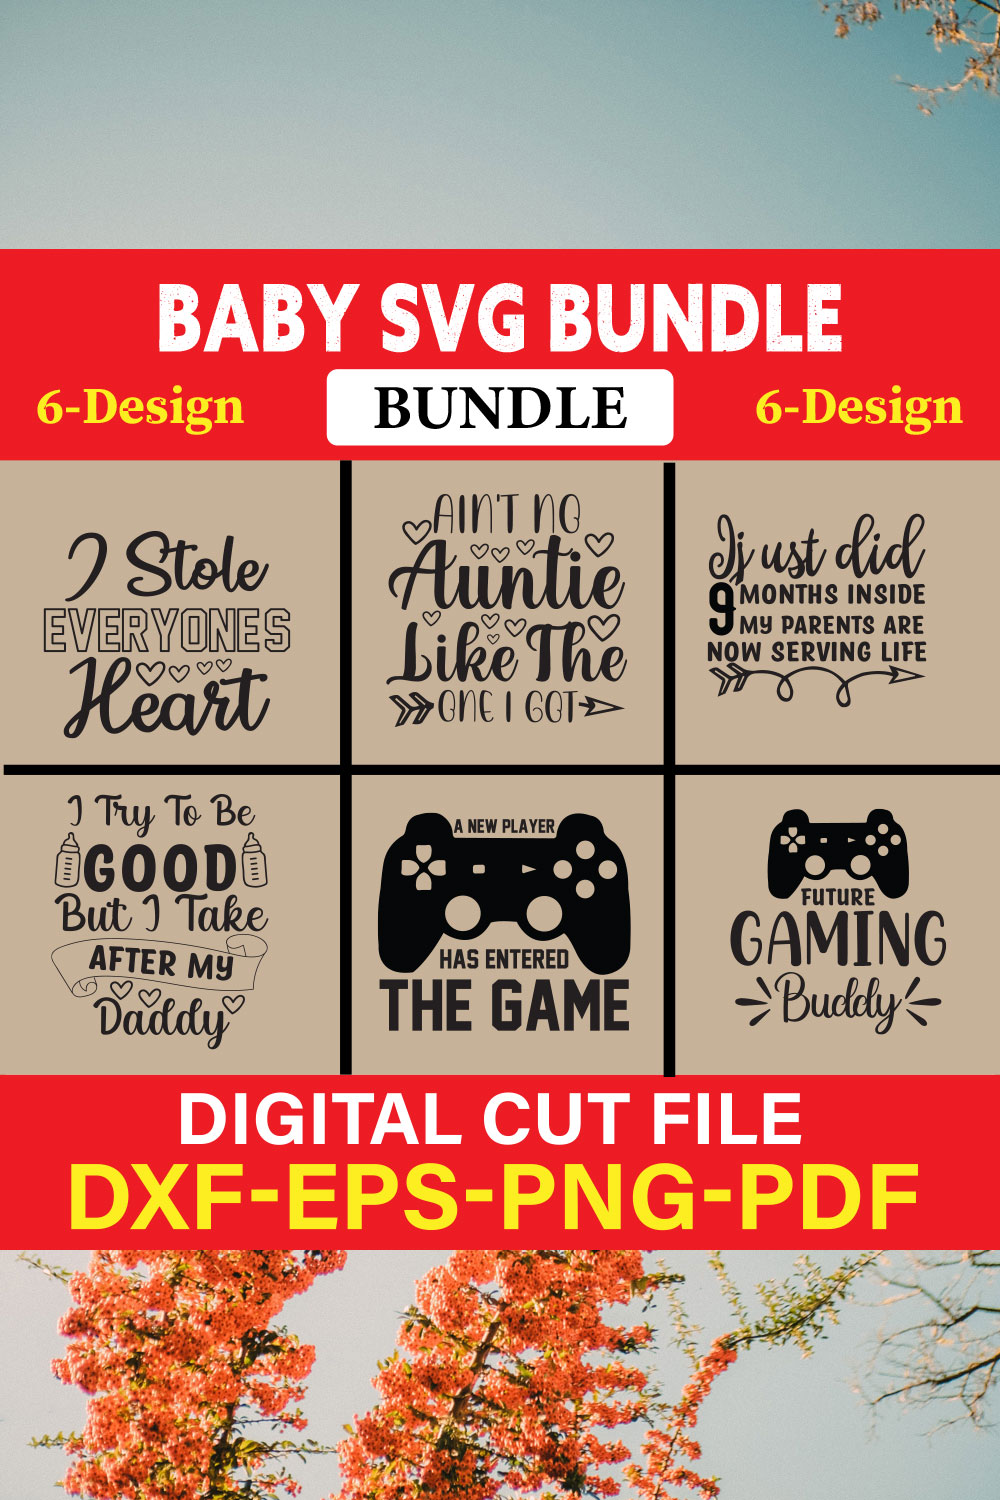 Baby SVG Bundle - Baby Girl Bundle Vol-03 pinterest preview image.